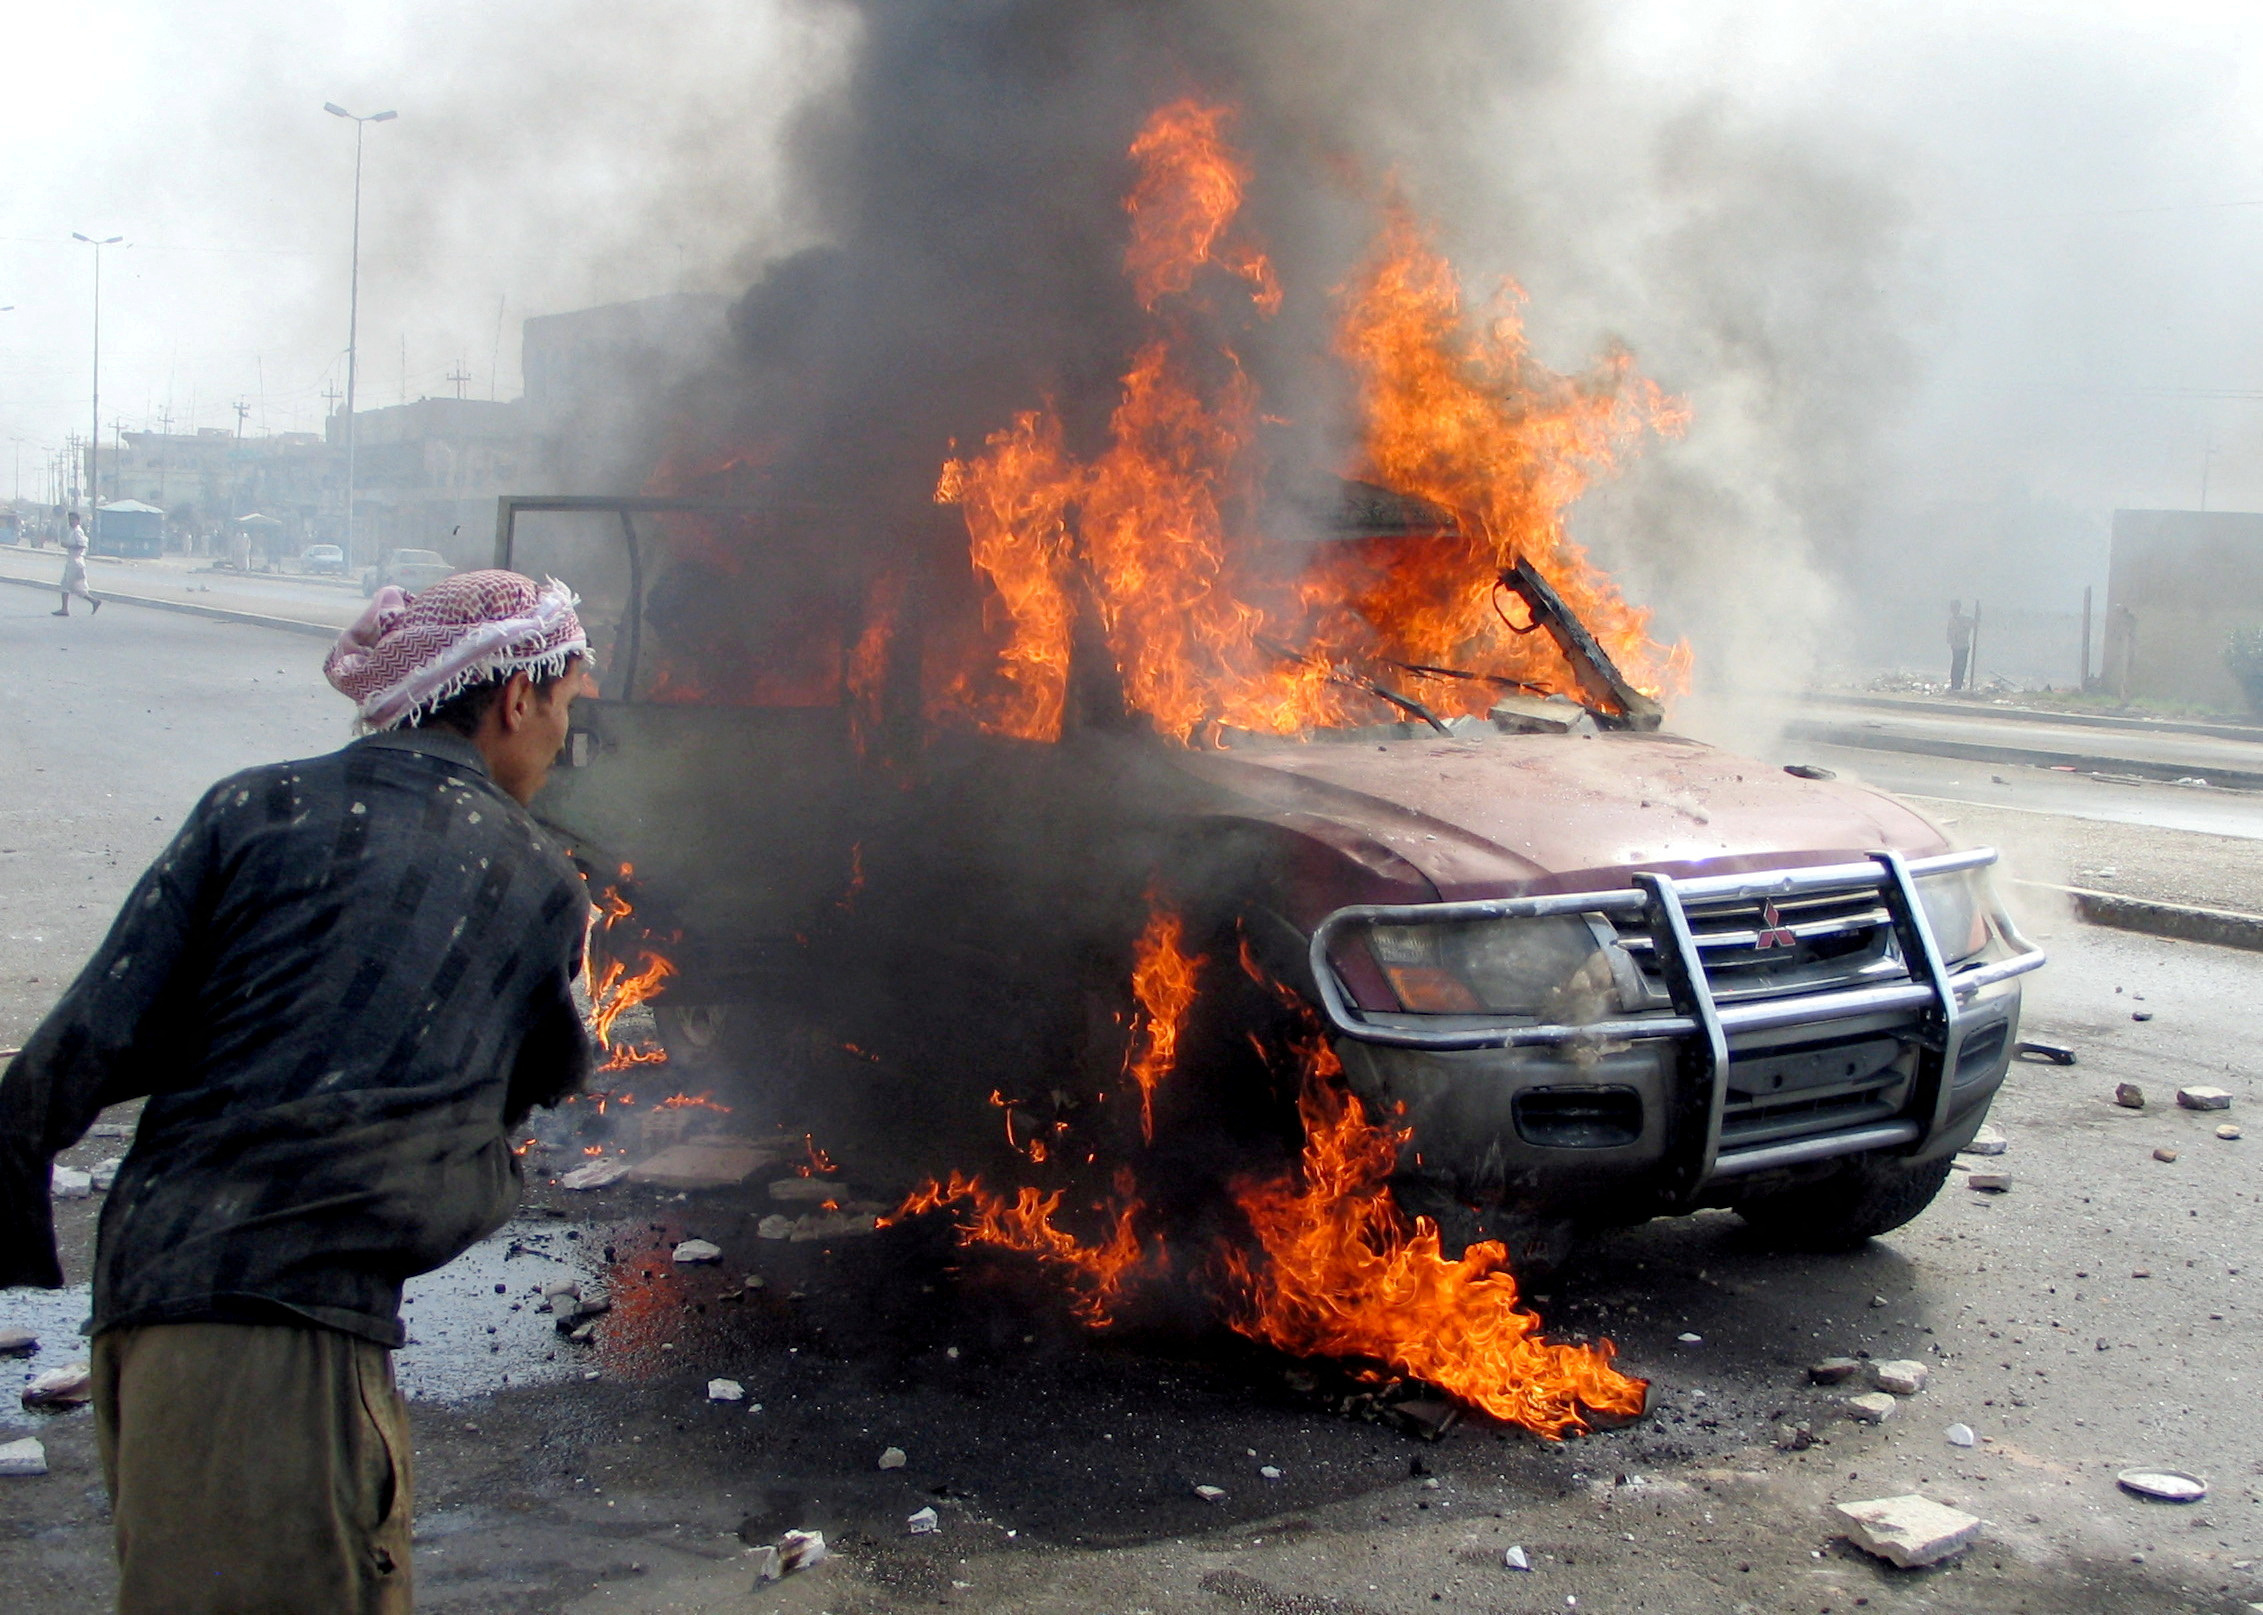 FILE PHOTO: Iraqi man looks at blazing vehicle after attack in Falluja